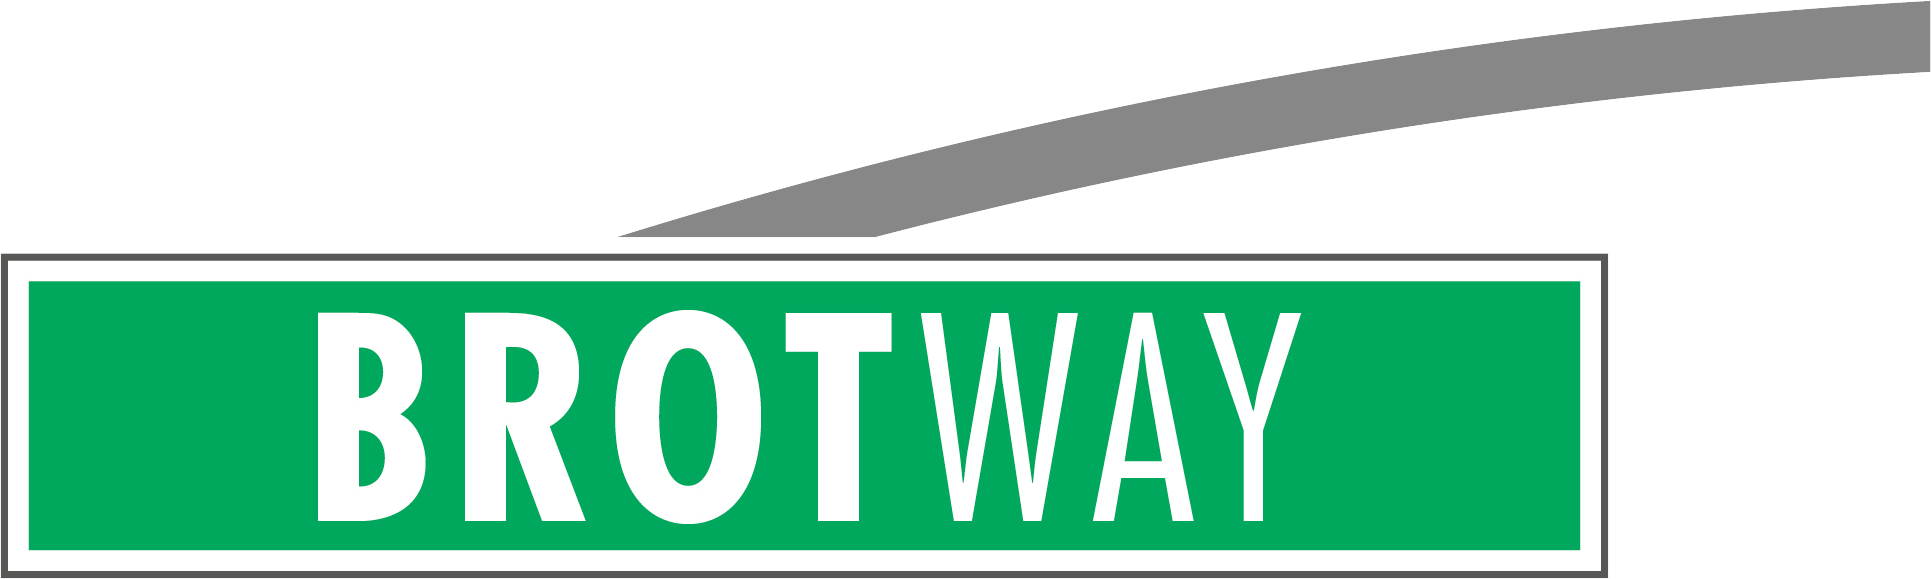 Brotway Logo